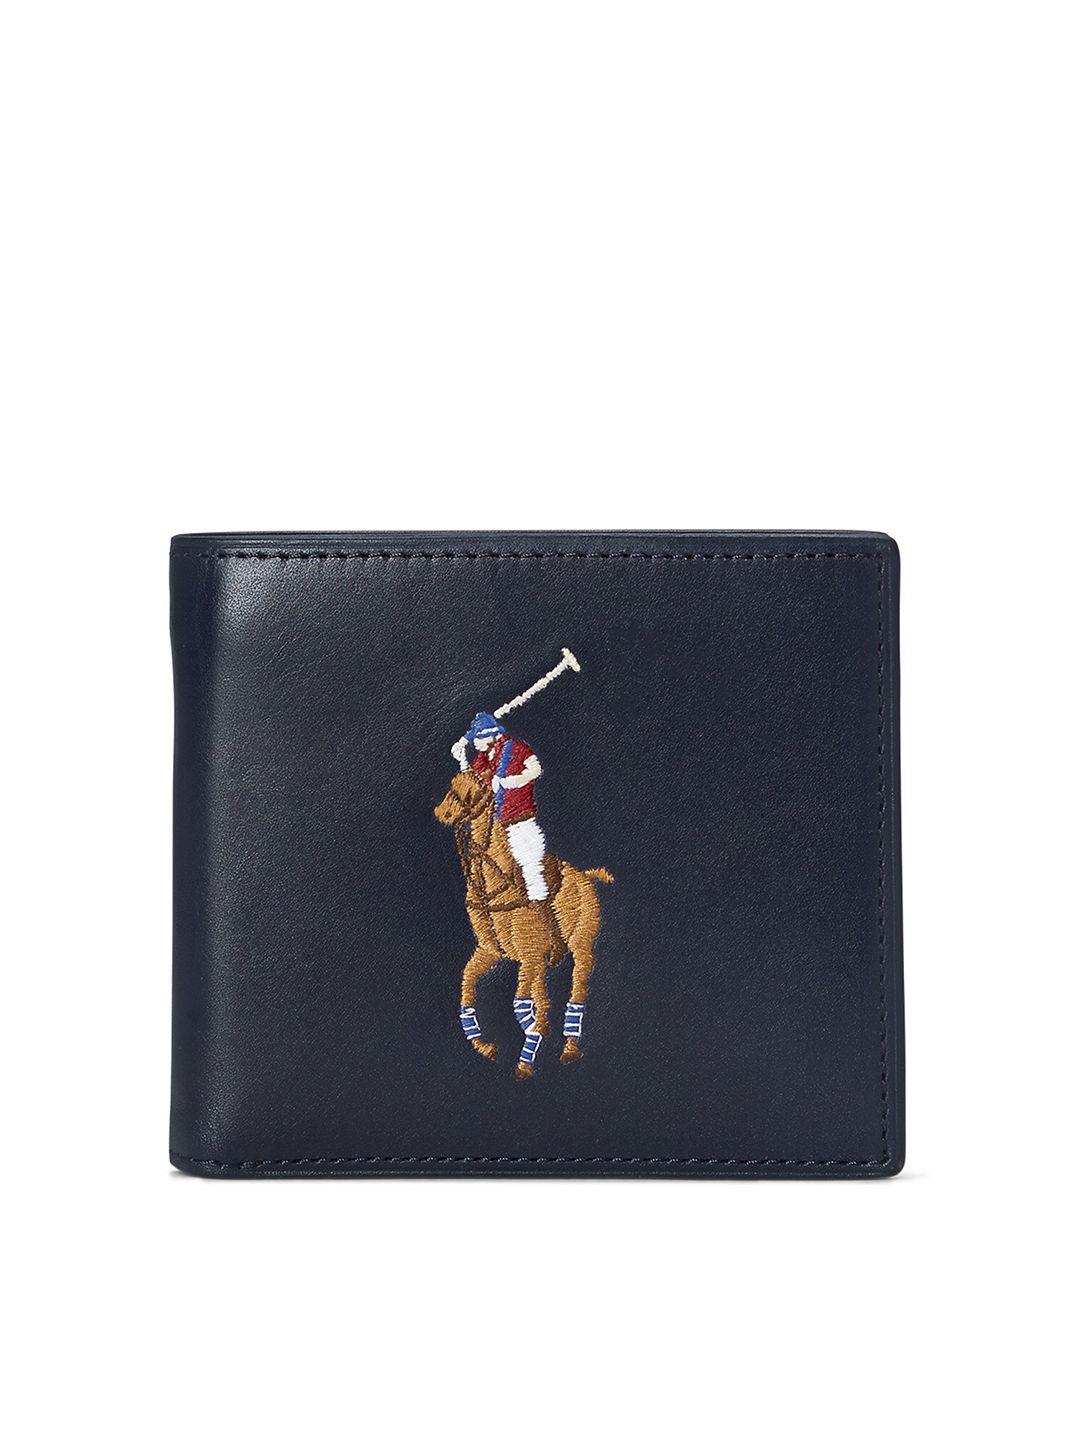 polo-ralph-lauren-men-pony-logo-embroidered-leather-bi-fold-wallet